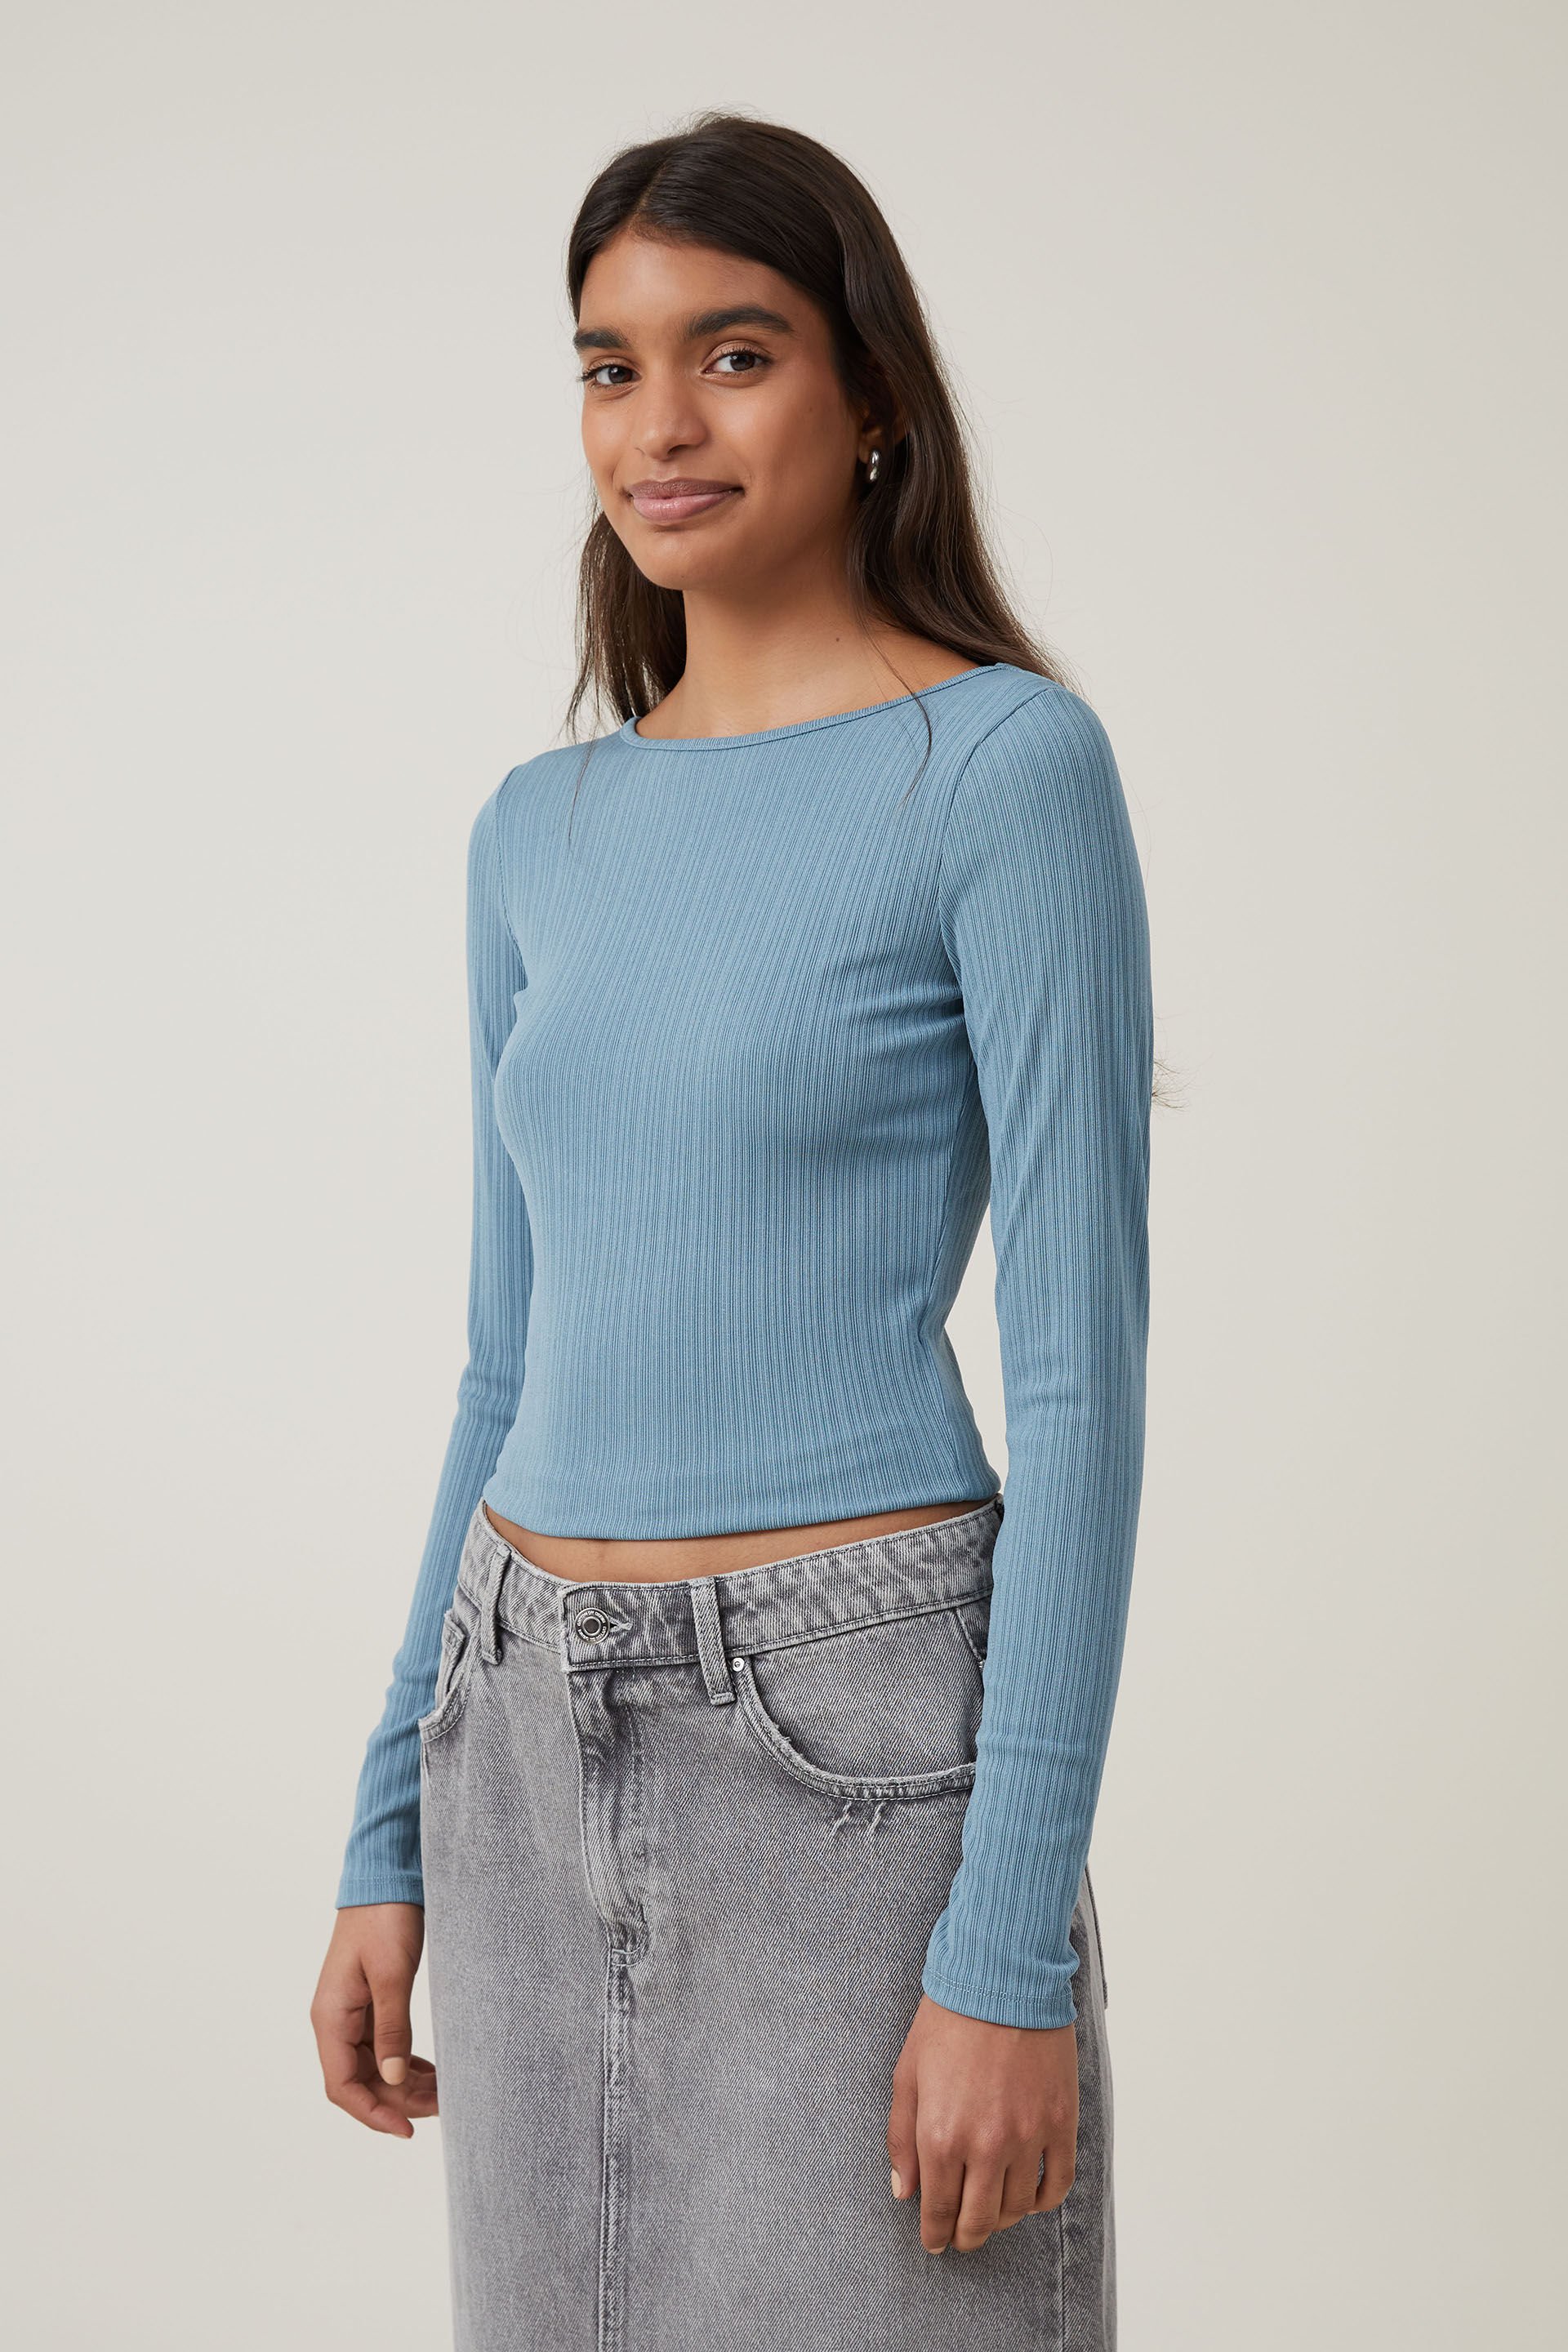 Cotton On Women - Romy Boat Neck Backless Long Sleeve Top - Aspen blue